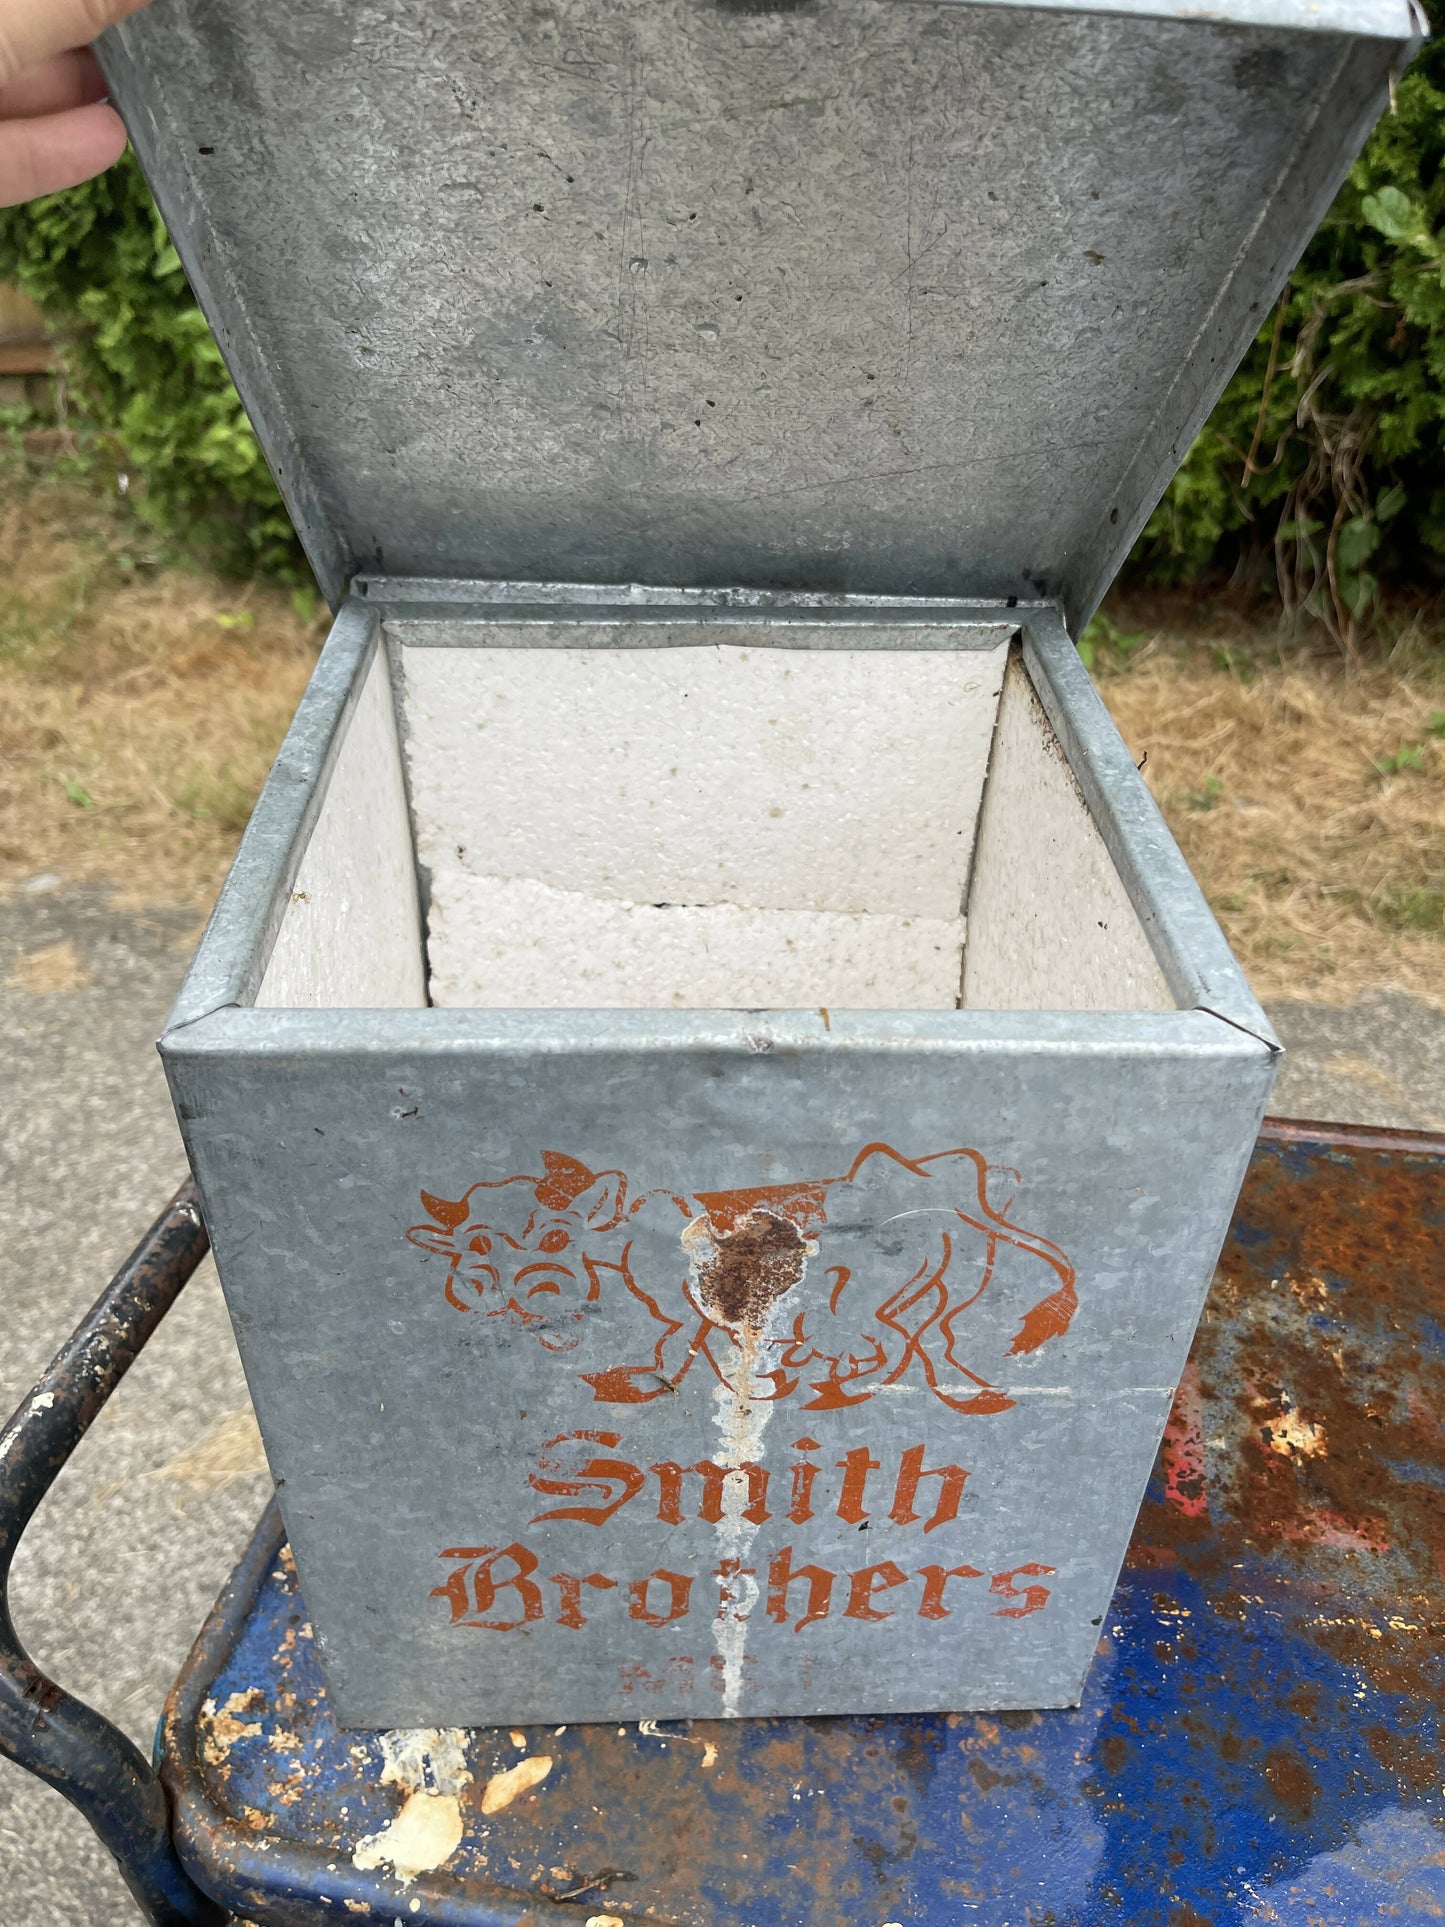 Vintage Smith Brothers Milk Box